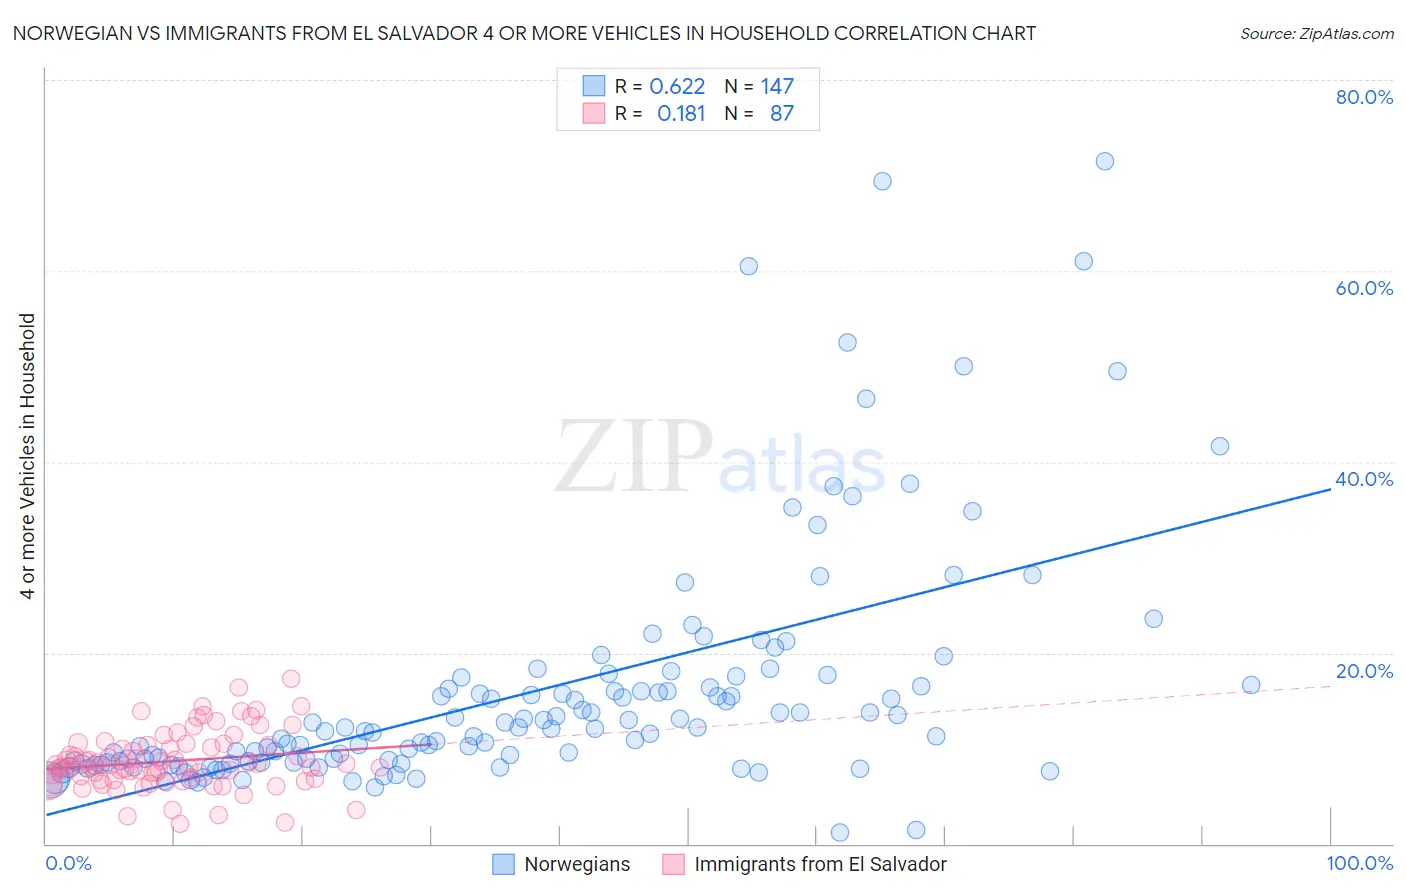 Norwegian vs Immigrants from El Salvador 4 or more Vehicles in Household